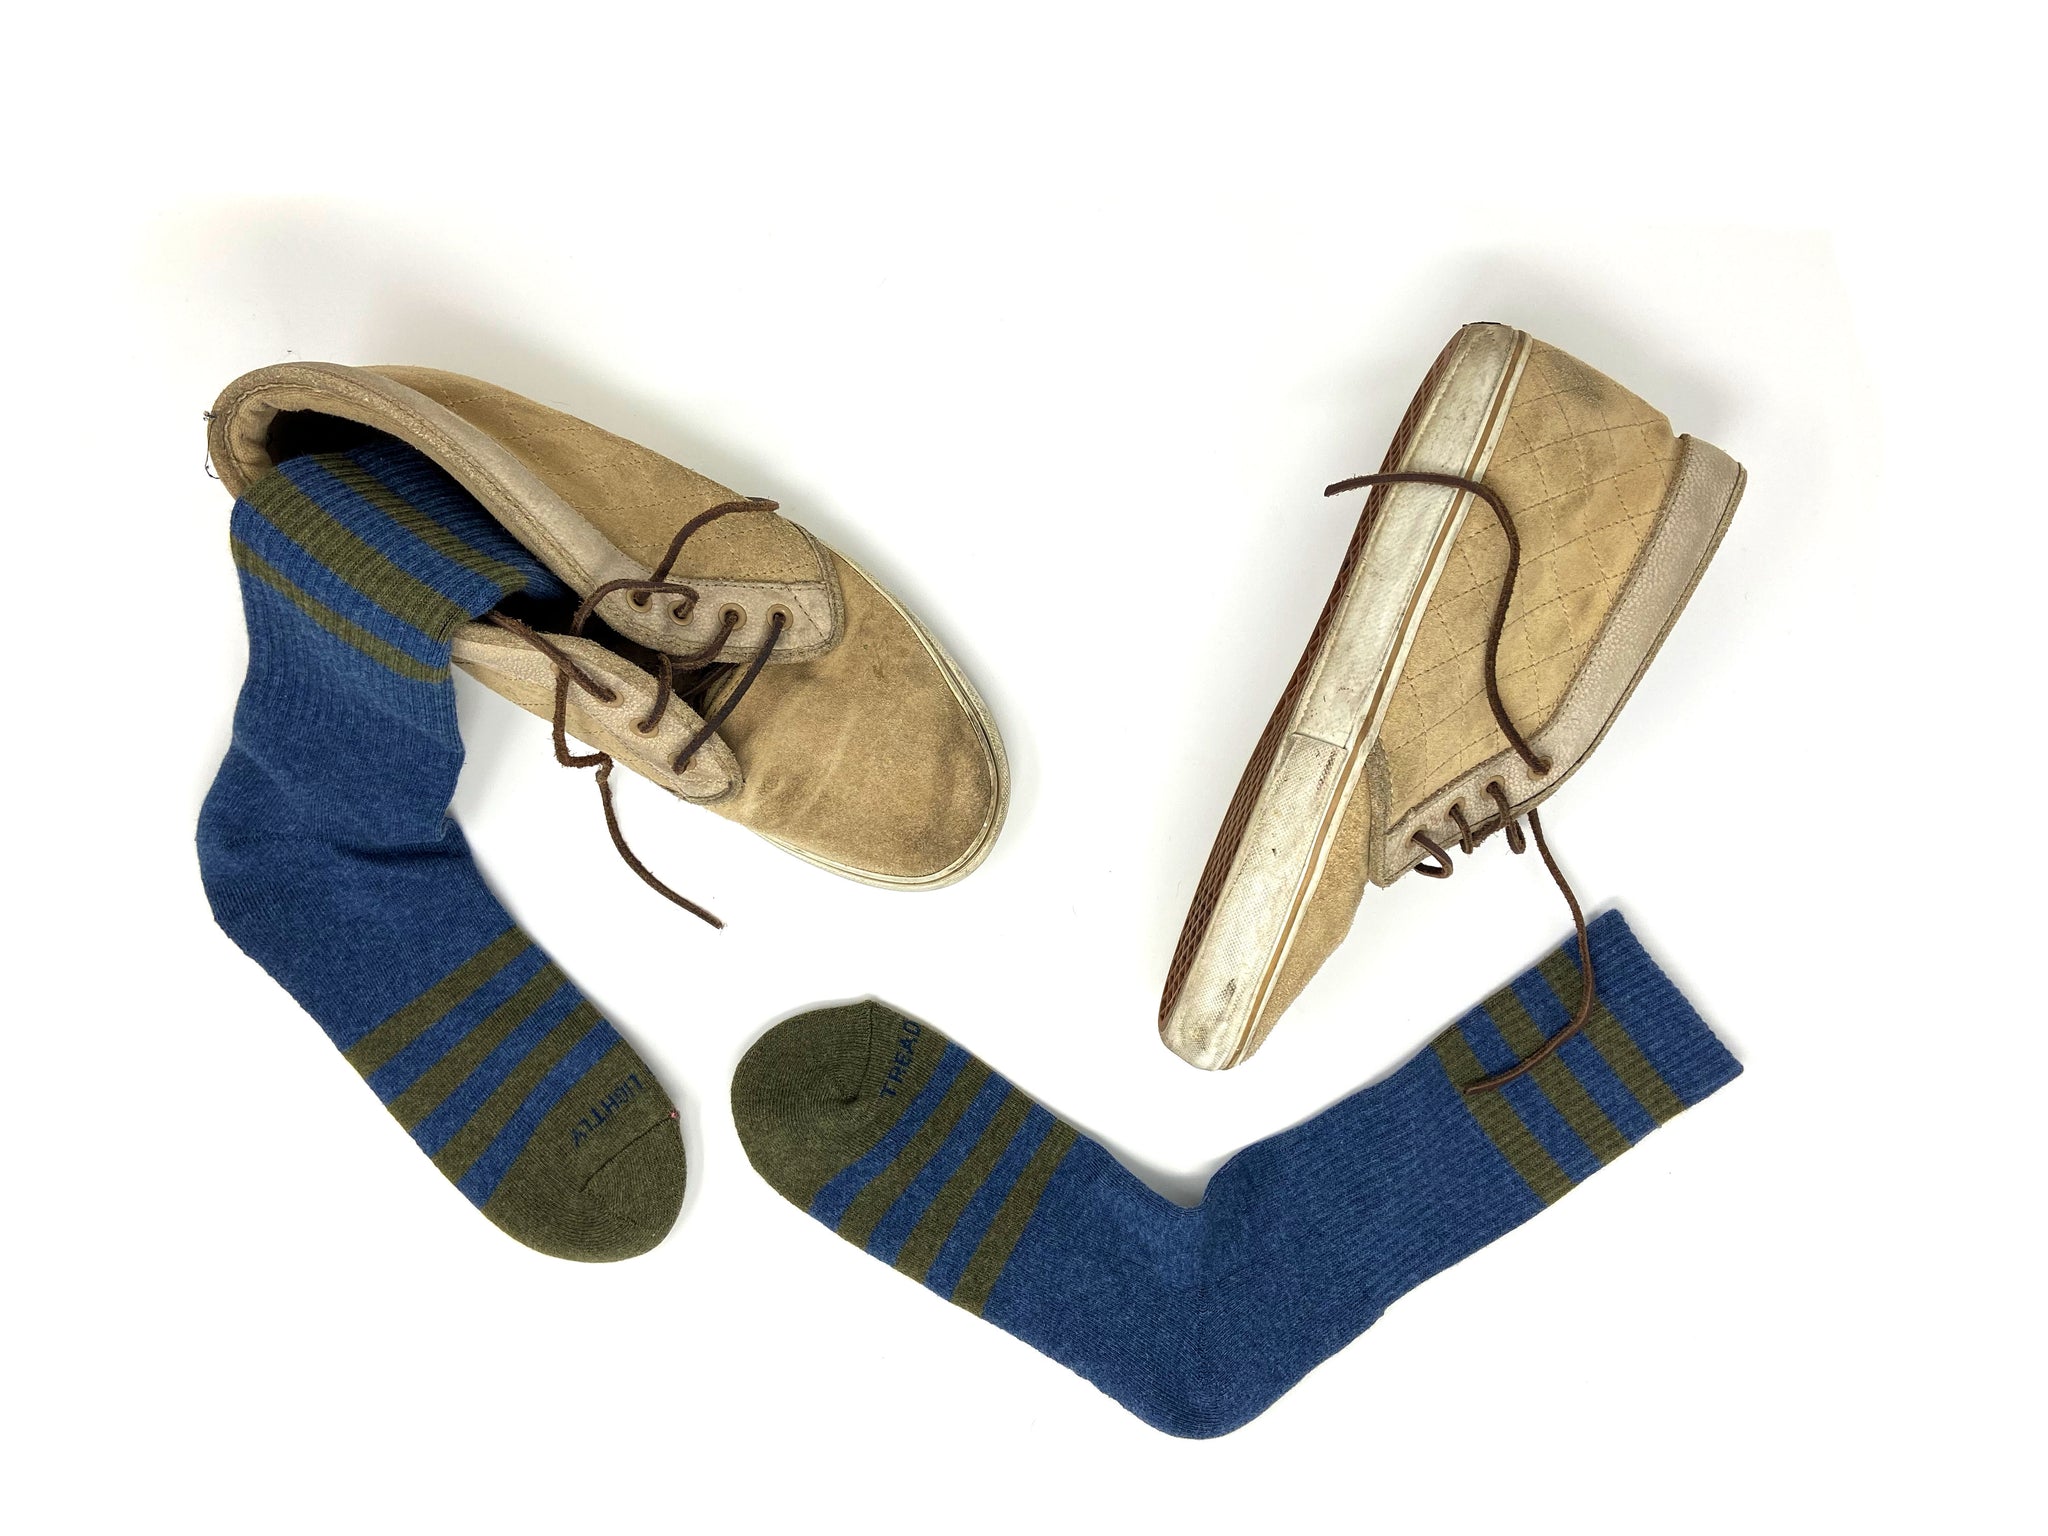 HEATHER STRIPES Socks - Navy/Olive